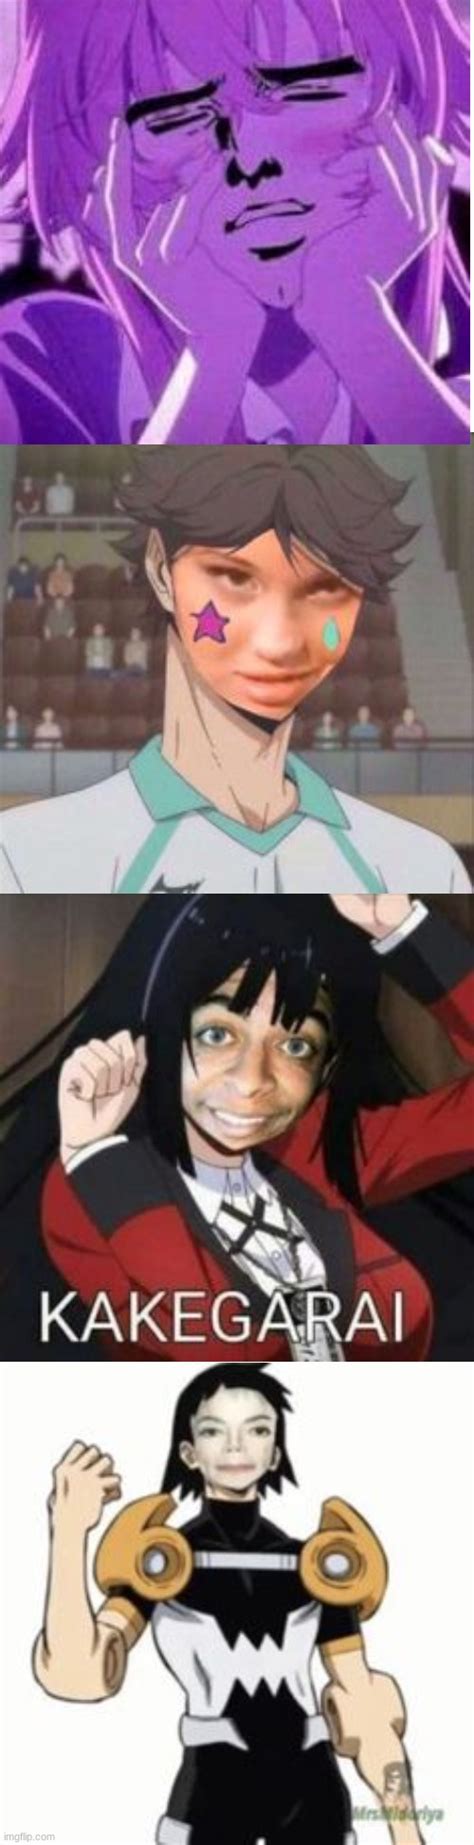 cursed anime images meme lasopacustom